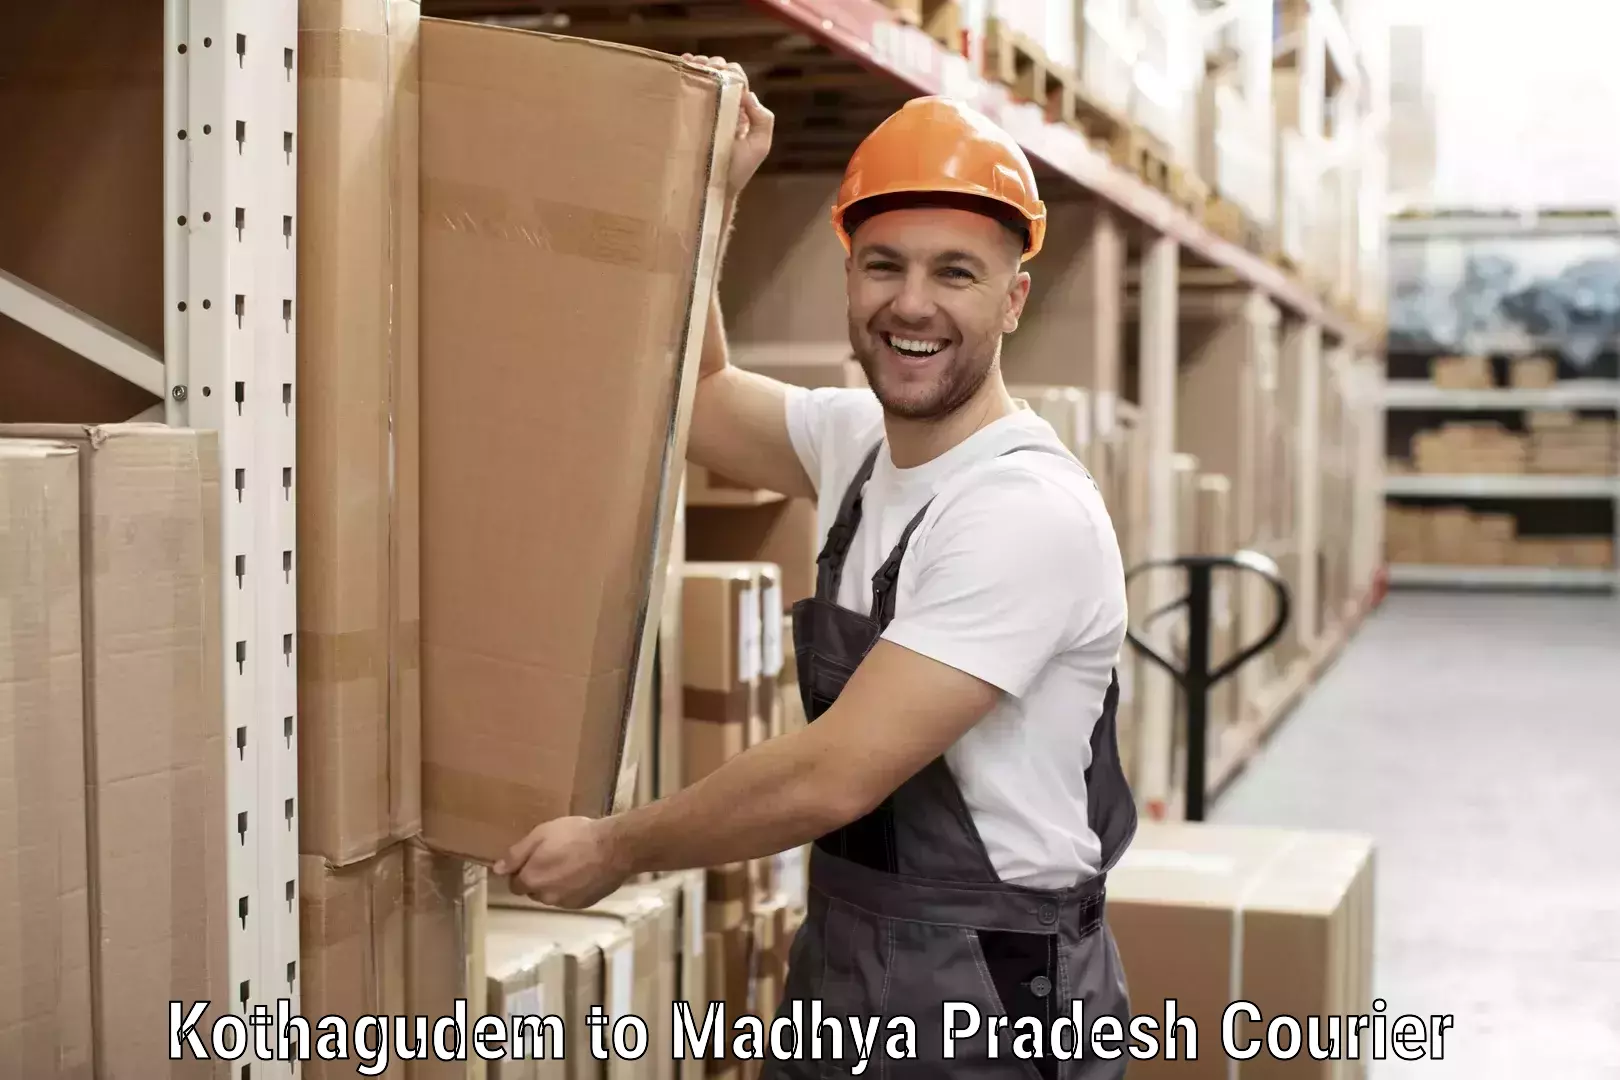 Customer-centric shipping Kothagudem to Nagda